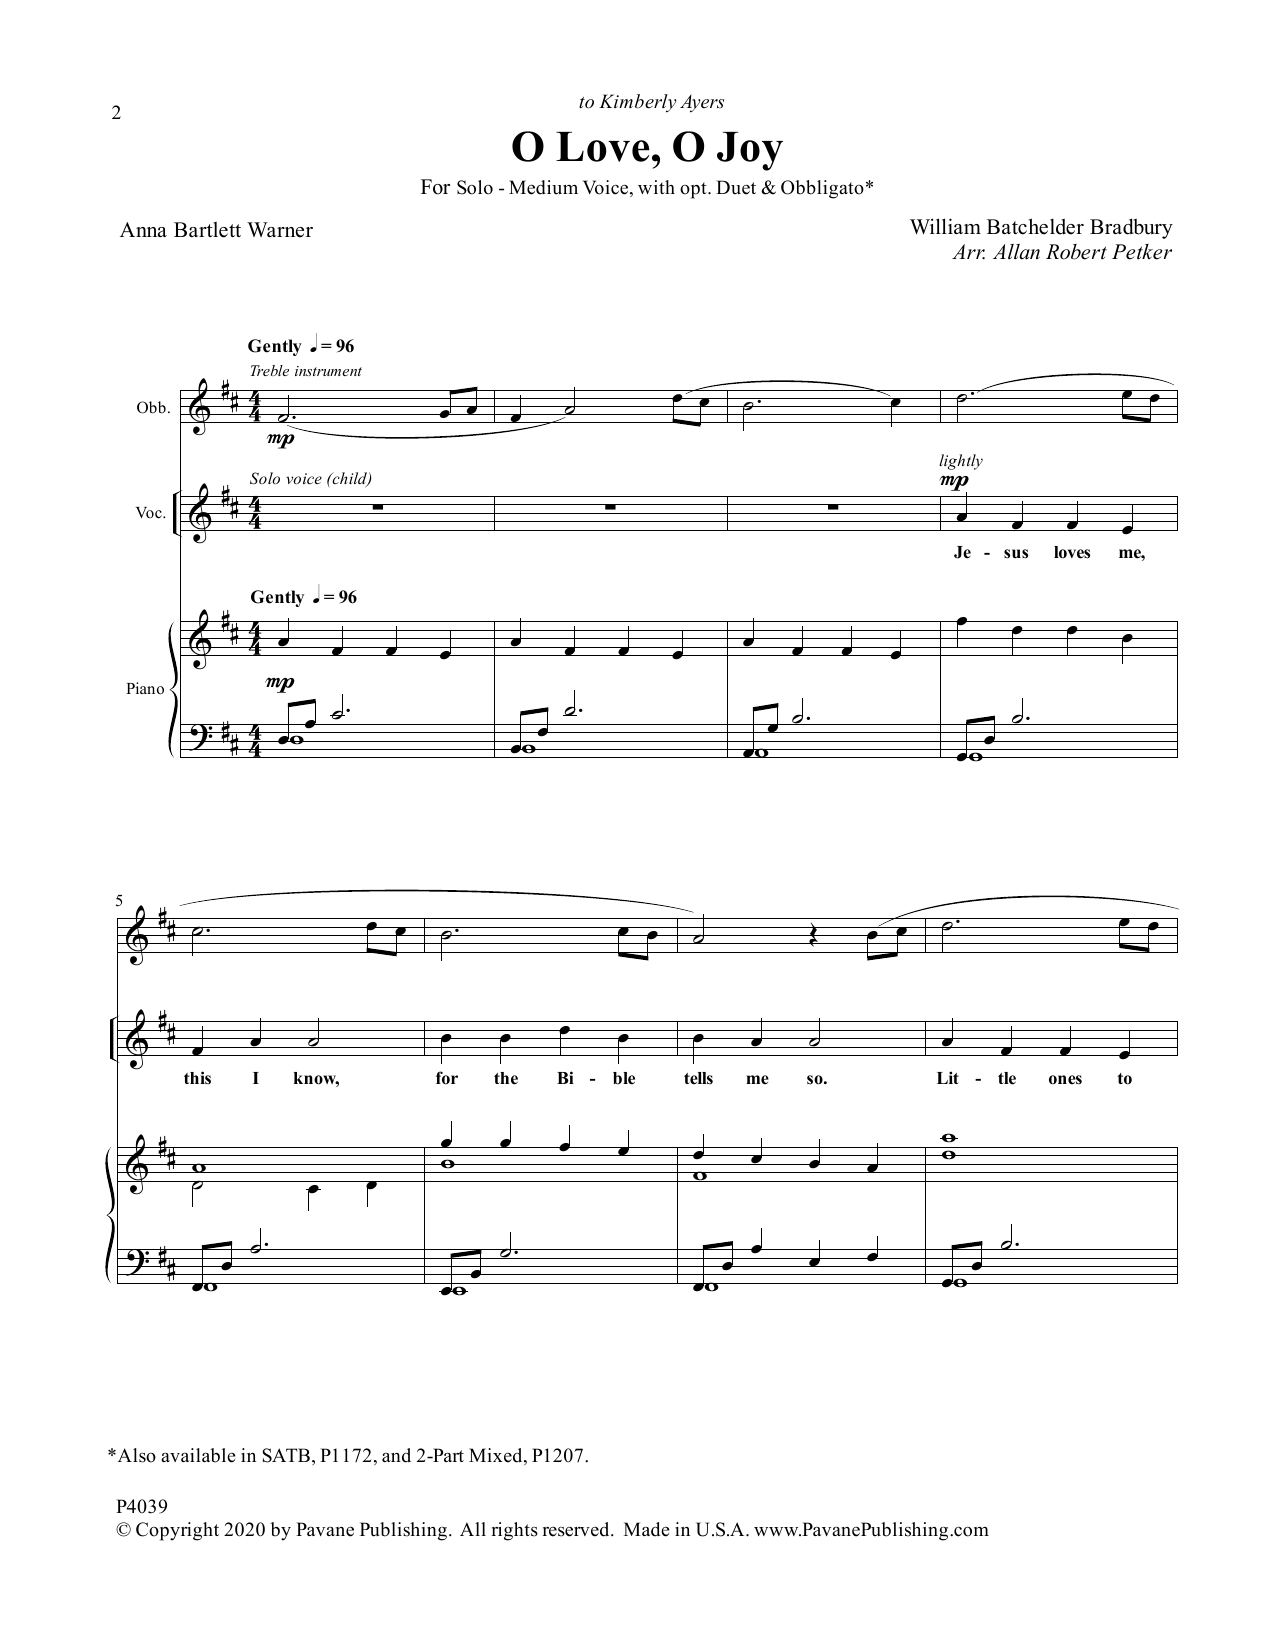 Allan Robert Petker O Love, O Joy Sheet Music Notes & Chords for Piano & Vocal - Download or Print PDF